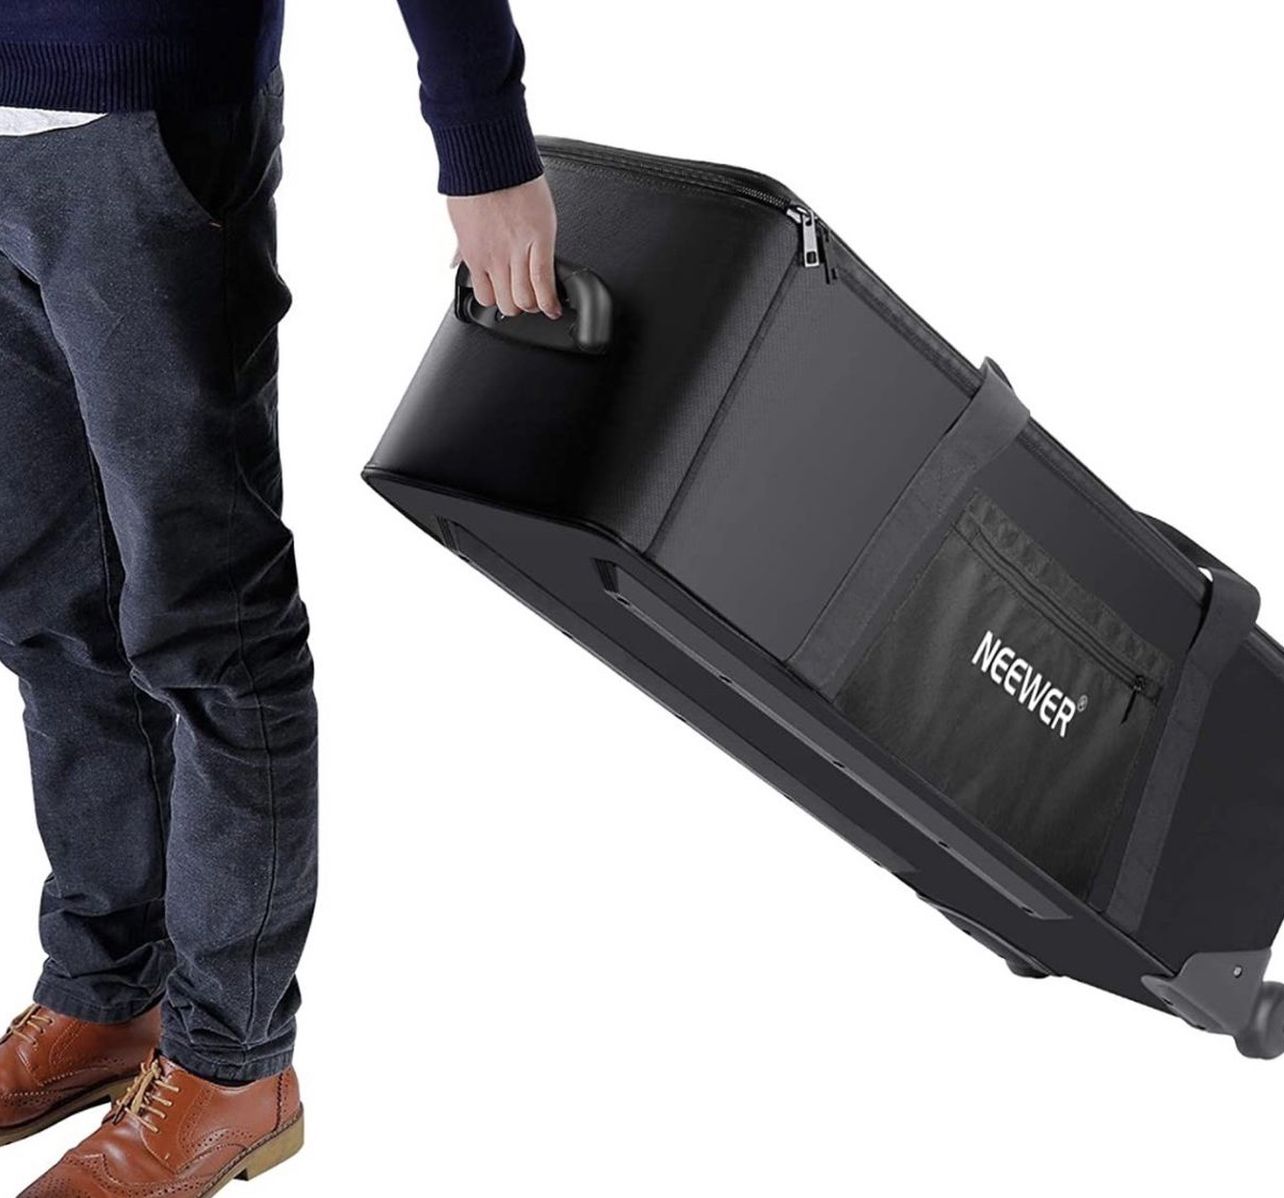 Neewer Photo Studio Equipment Case Rolling Bag